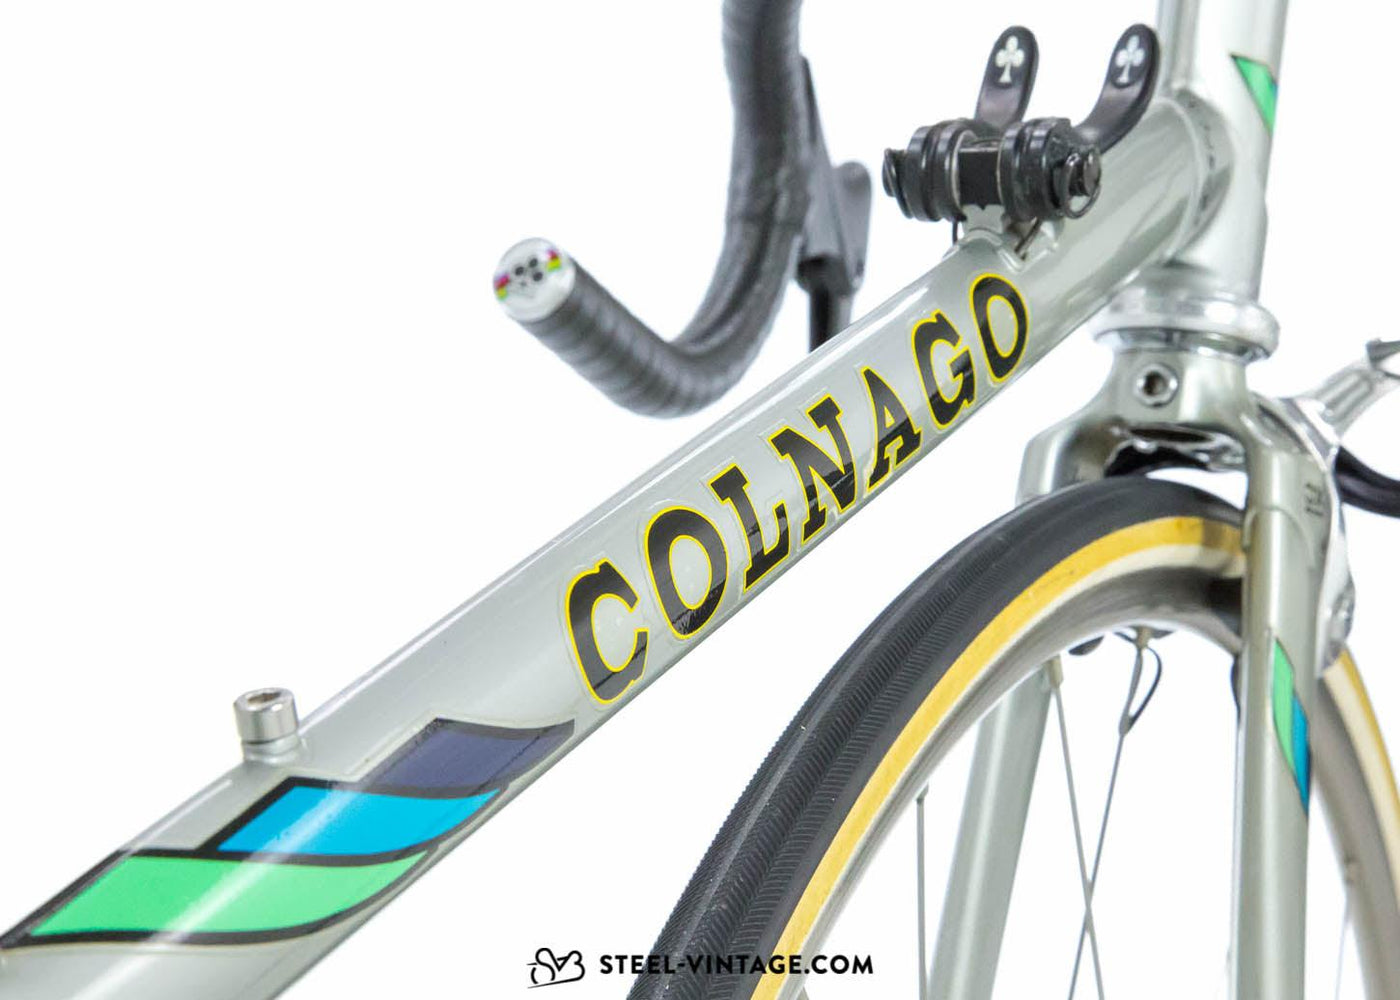 Colnago Oval CX Rare Road Bike 1980s - Steel Vintage Bikes